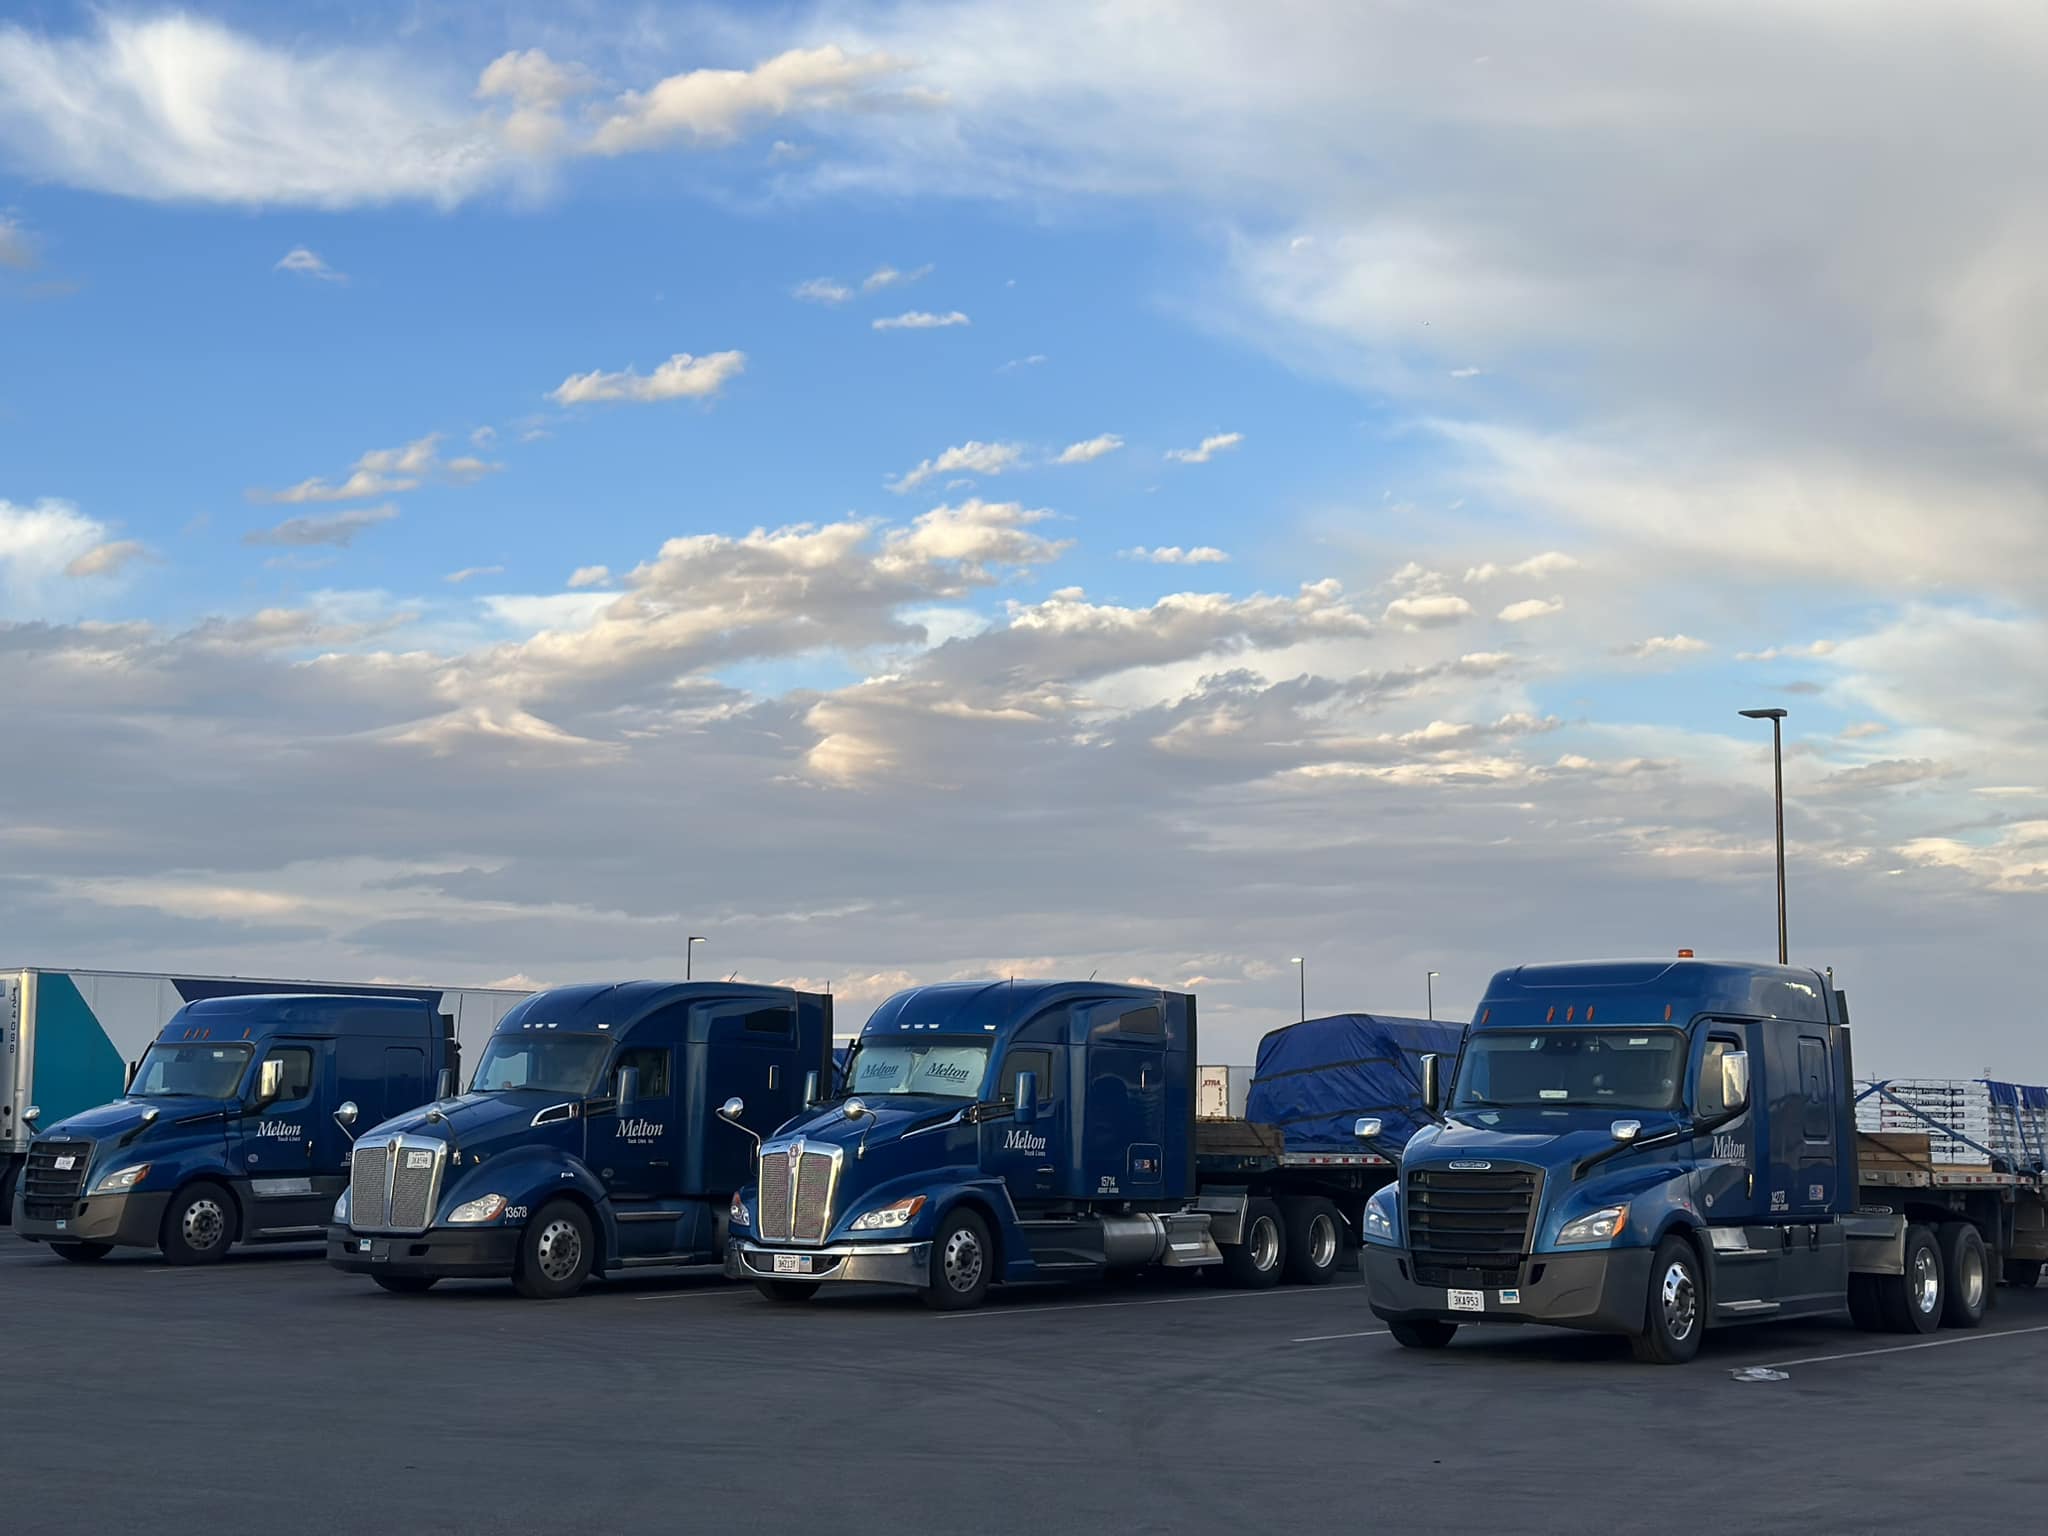 Melton trucks parked in the sunset